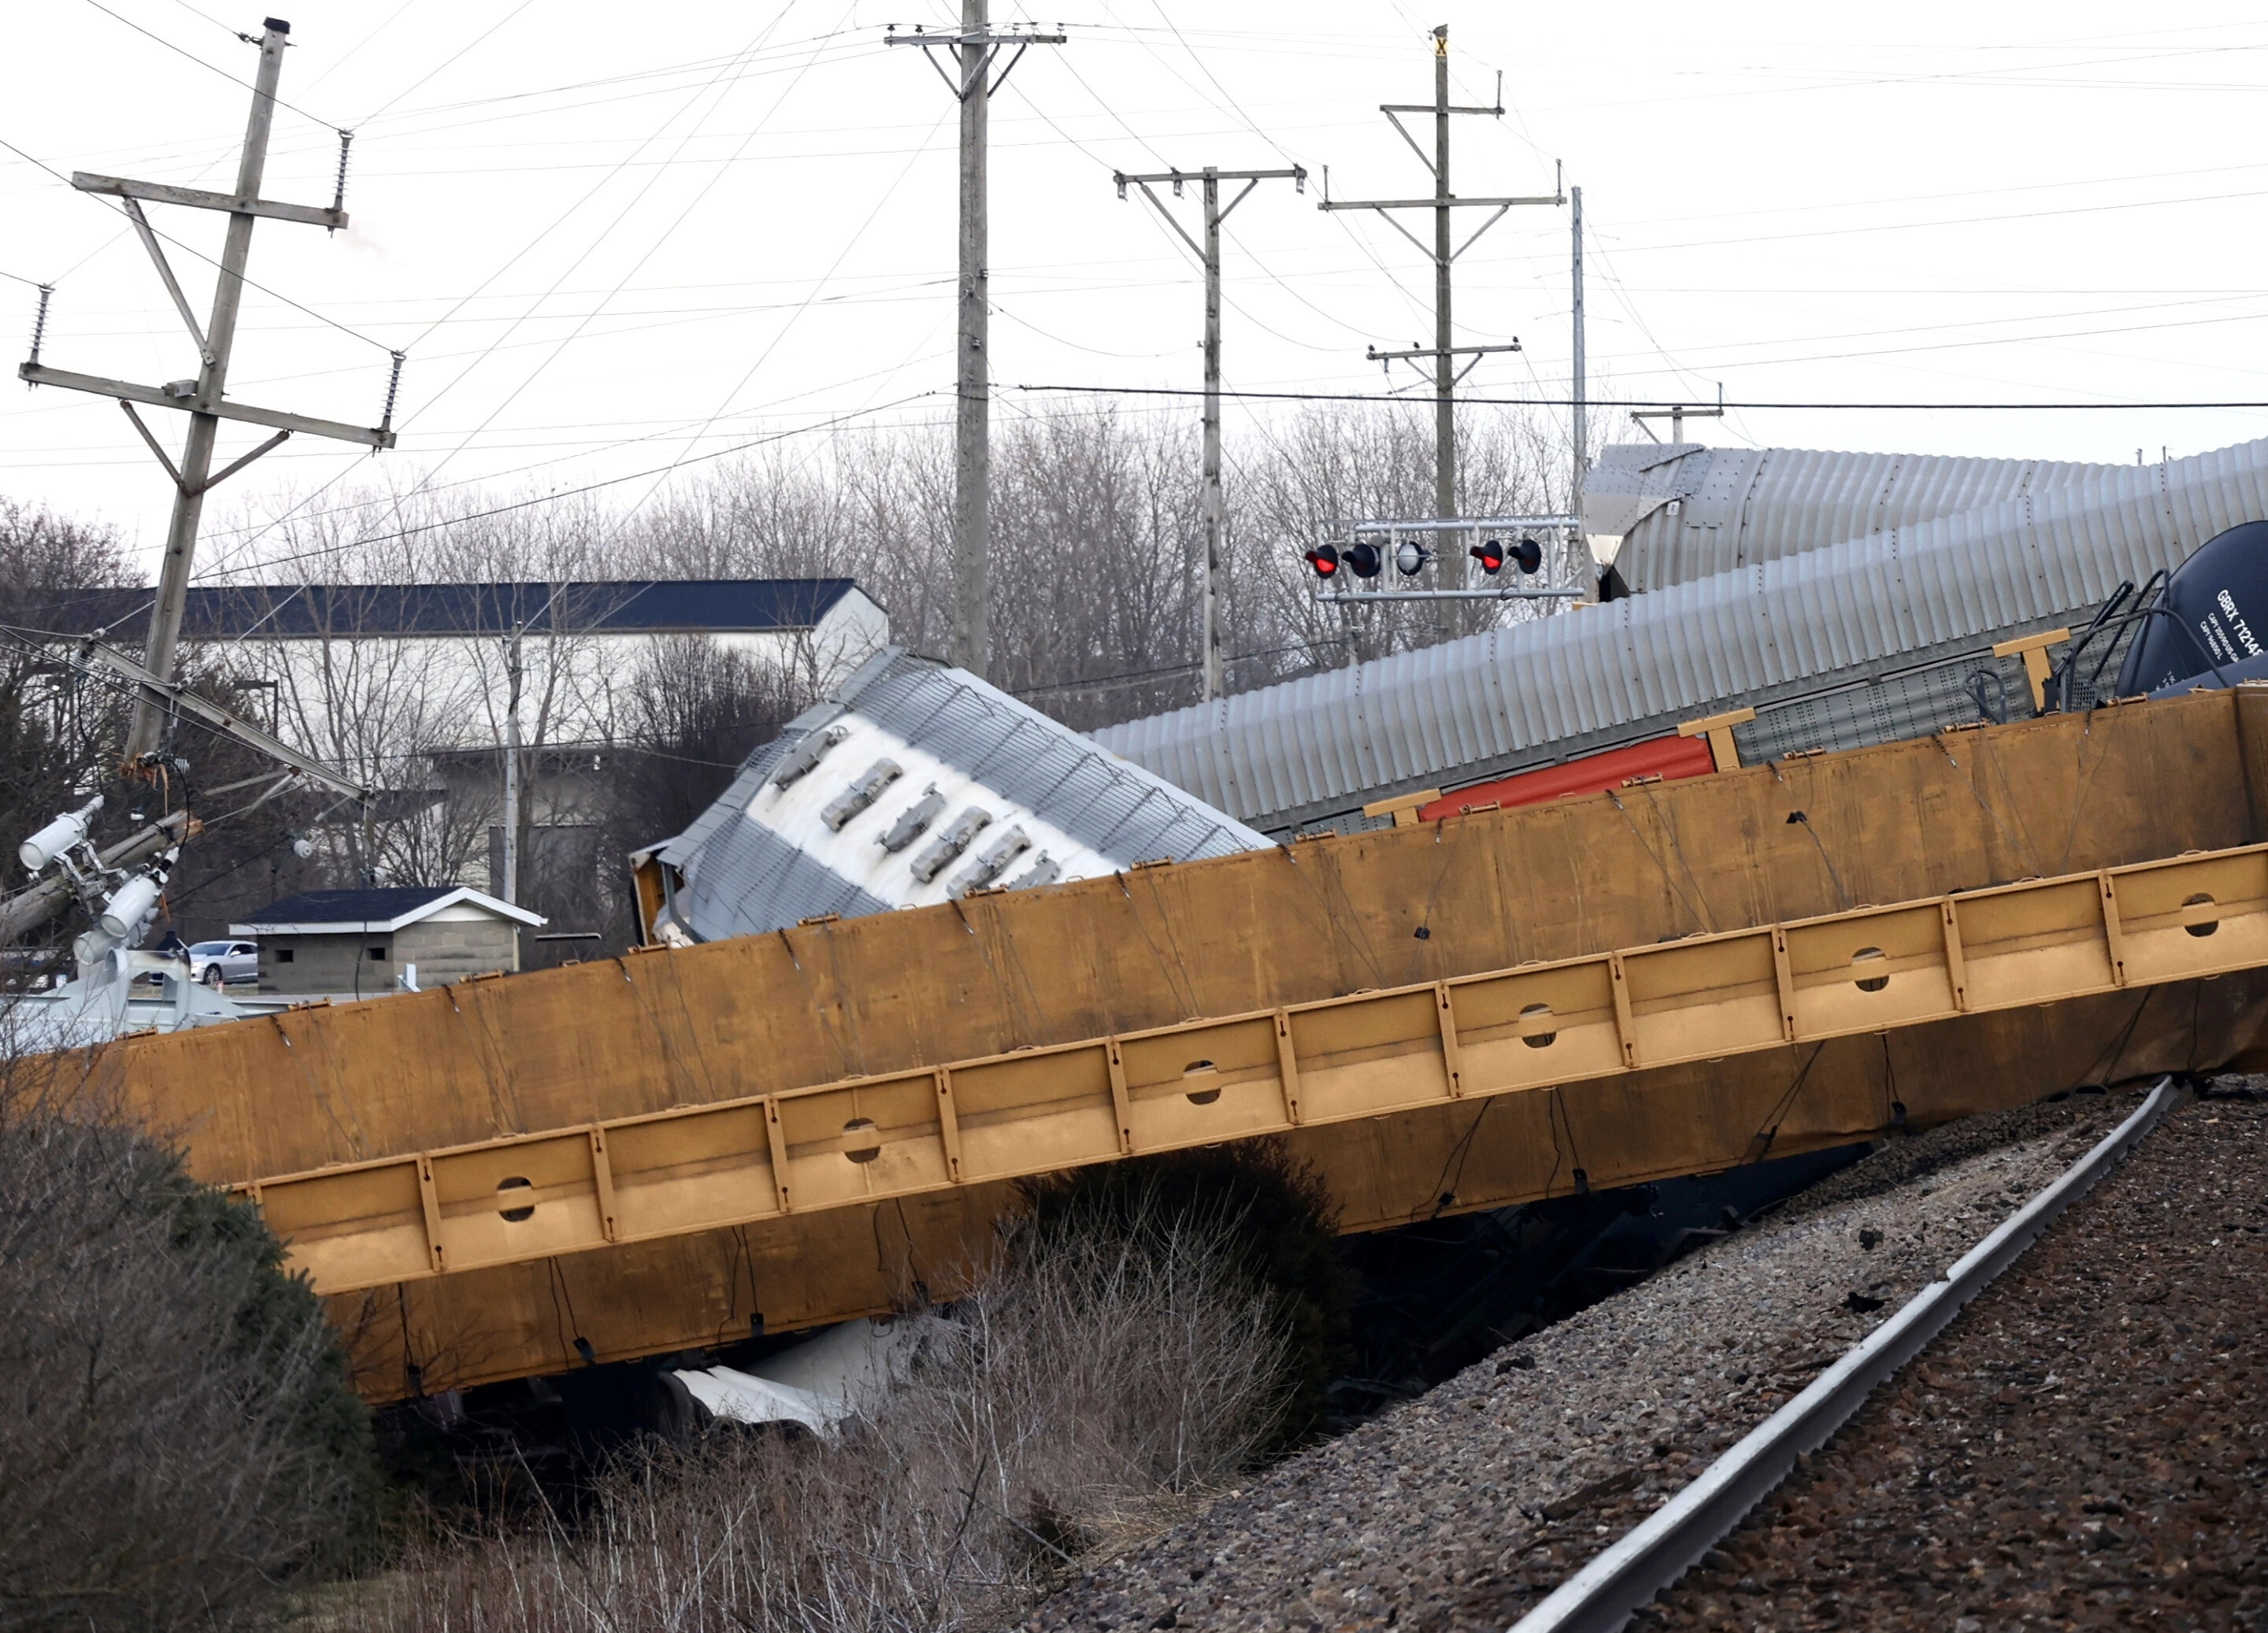 #Latest Ohio derailment poses no public risk, officials say